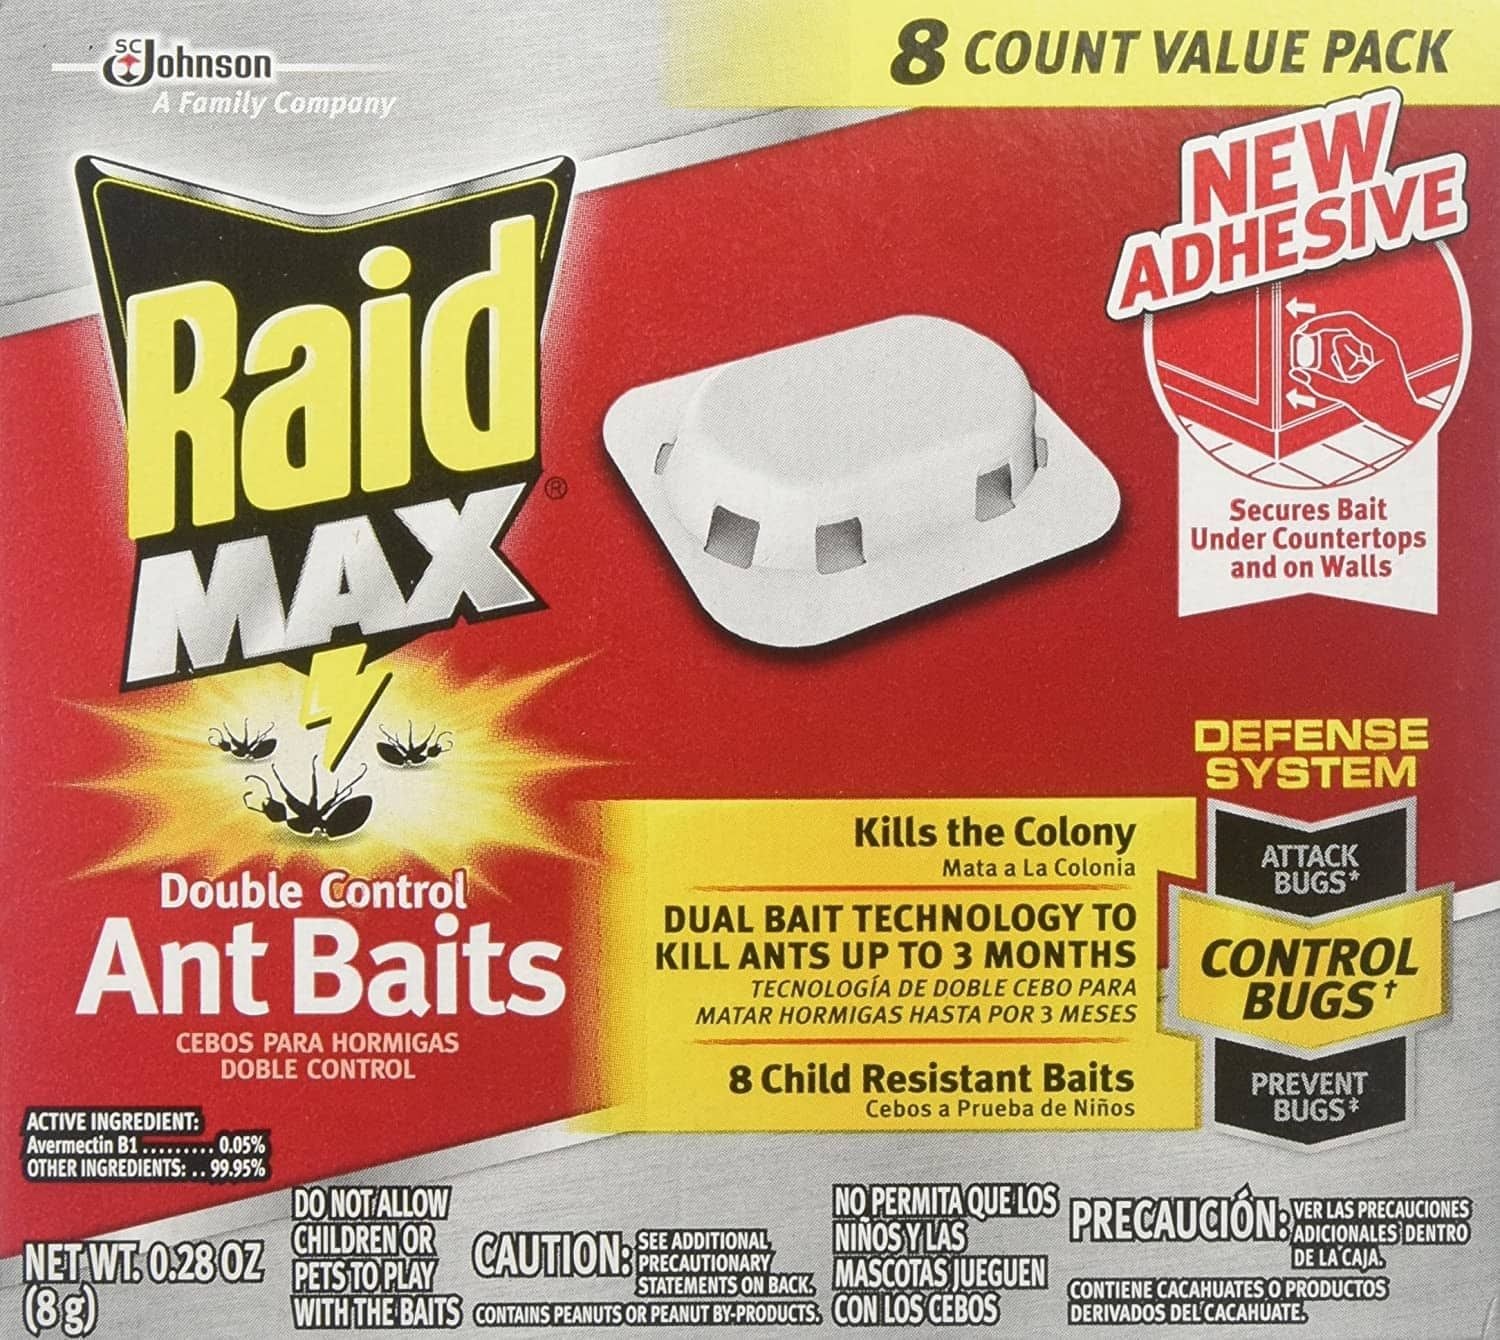 Raid Max Double Control Ant Baits